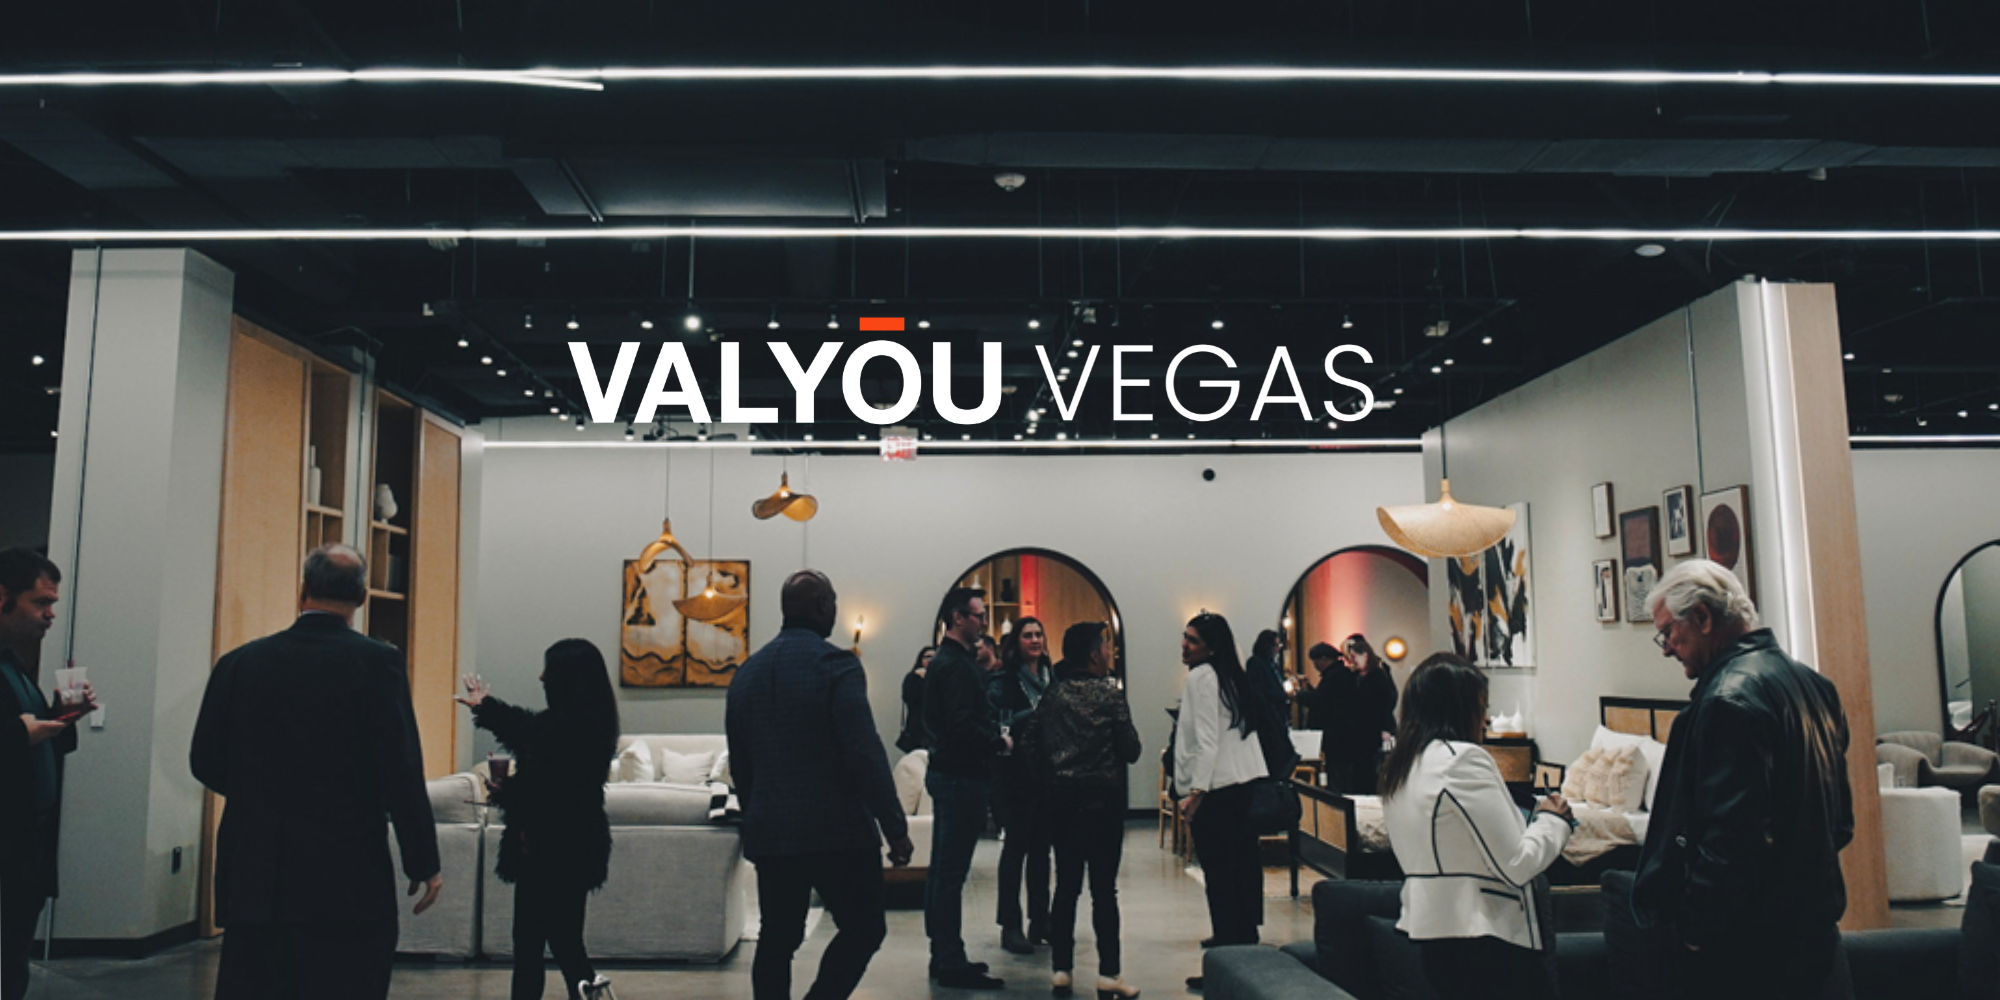 Las Vegas Showroom Designed By Award-Winning Architect